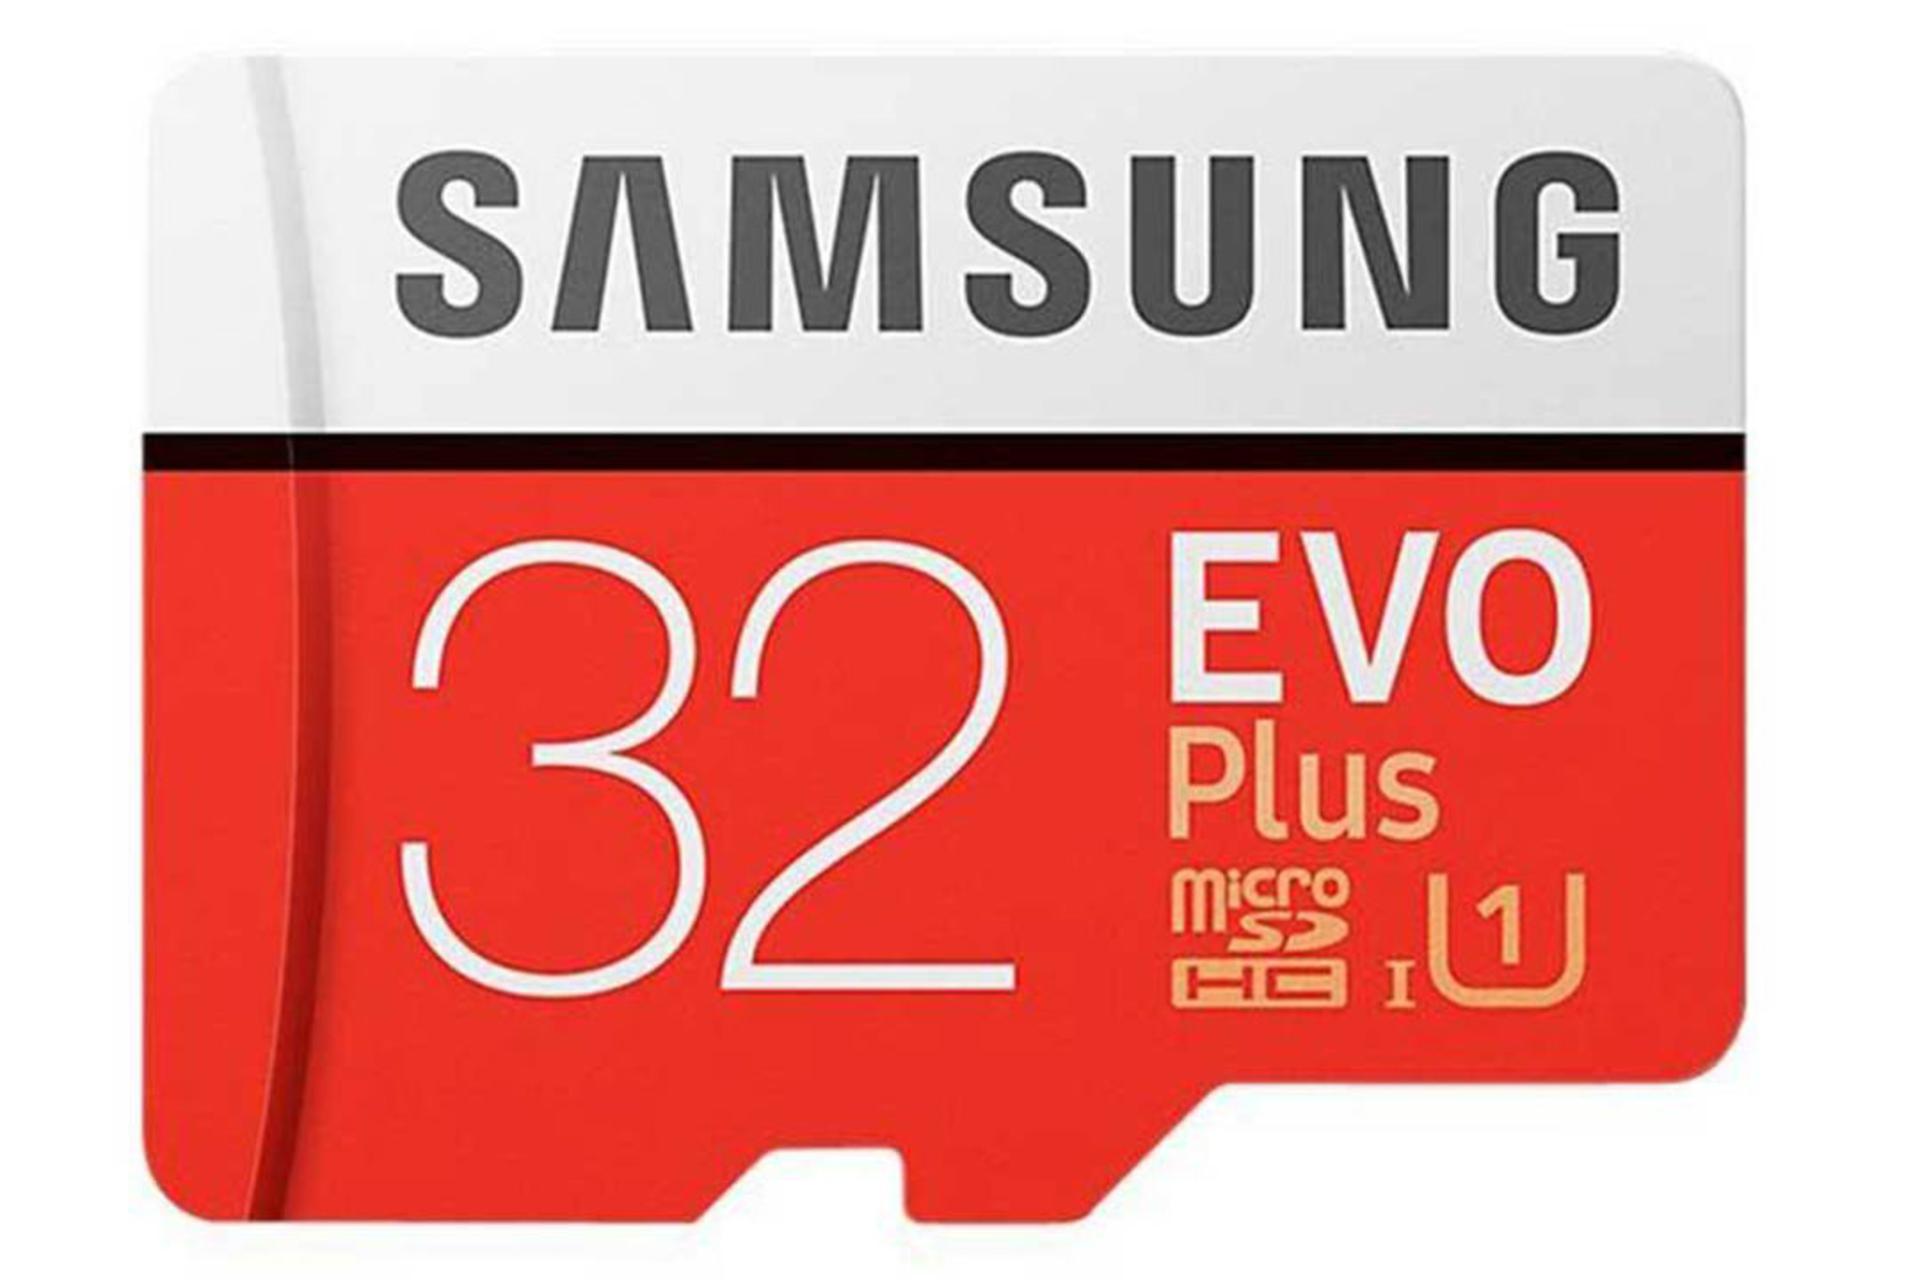 Samsung Evo Plus microSDHC Class 10 UHS-I U1 32GB